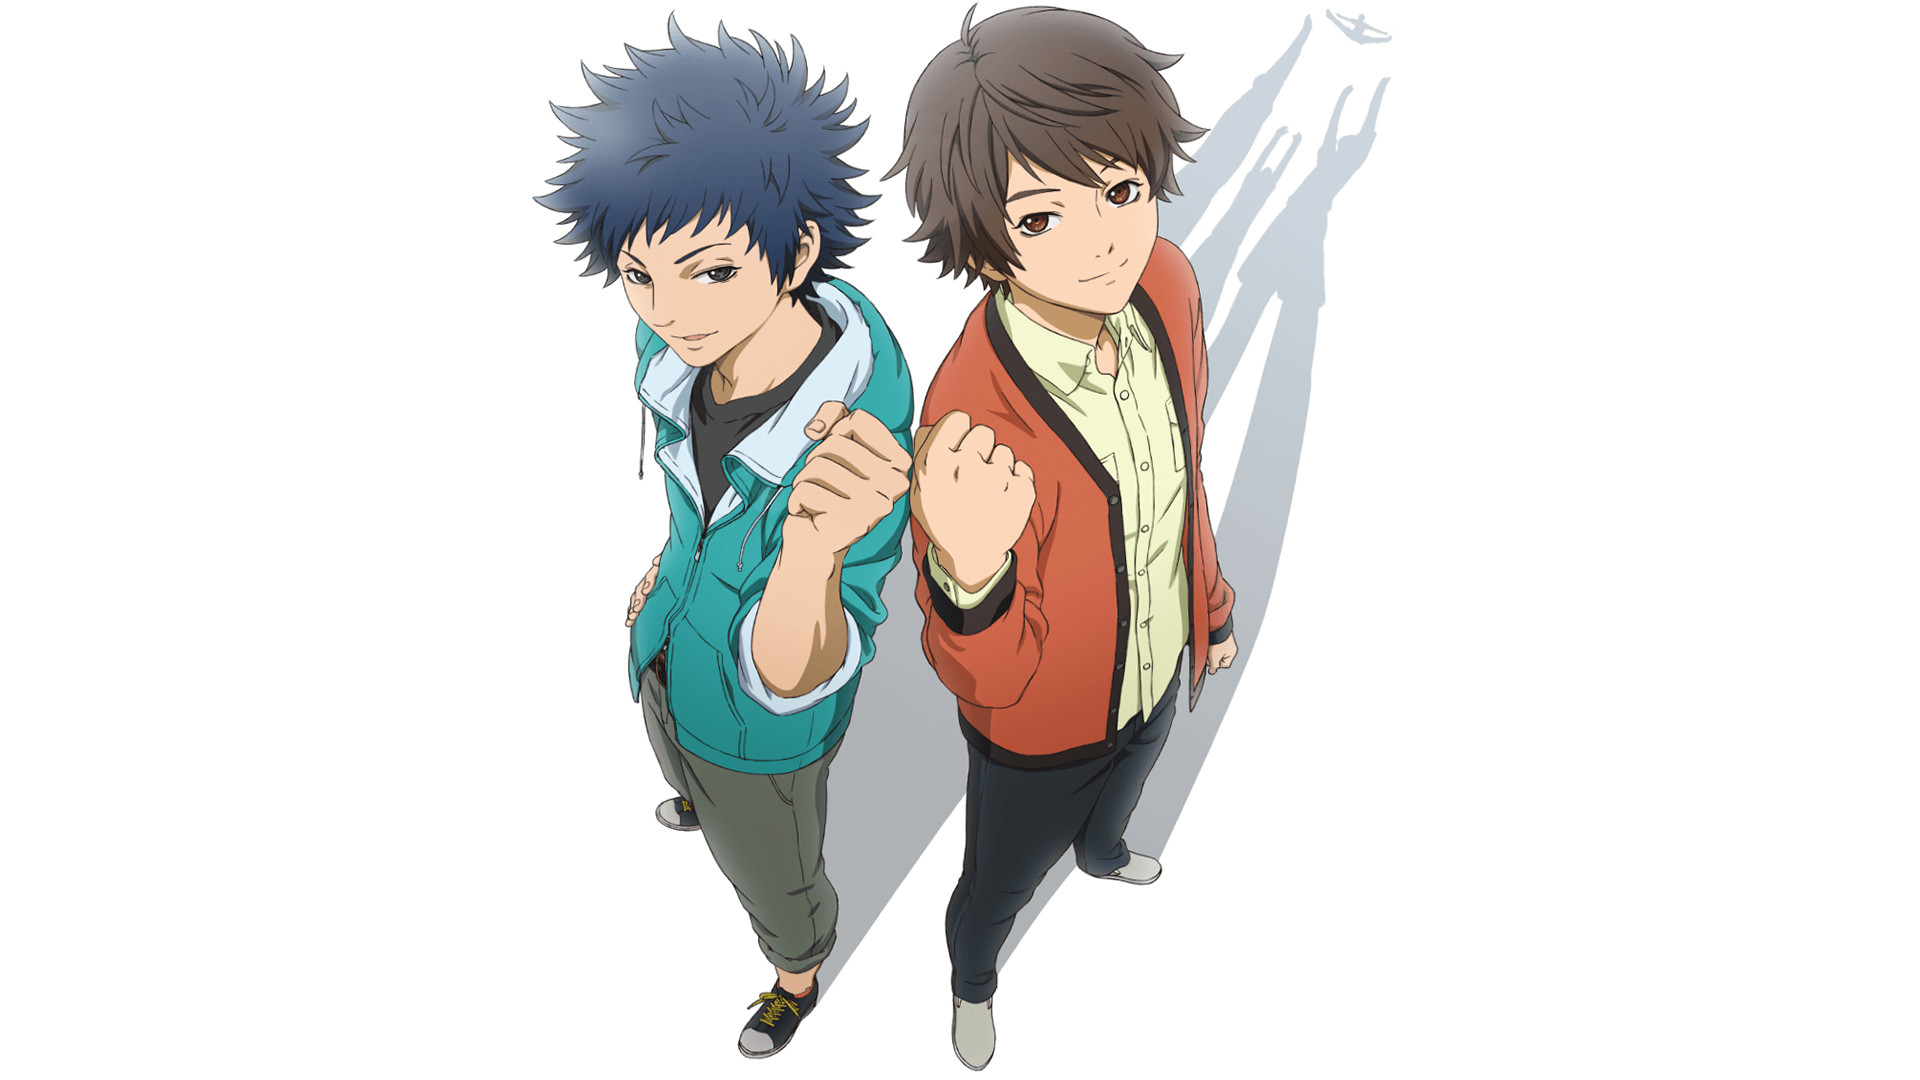 HD Wallpaper Background ID713832. Anime Cheer Boys